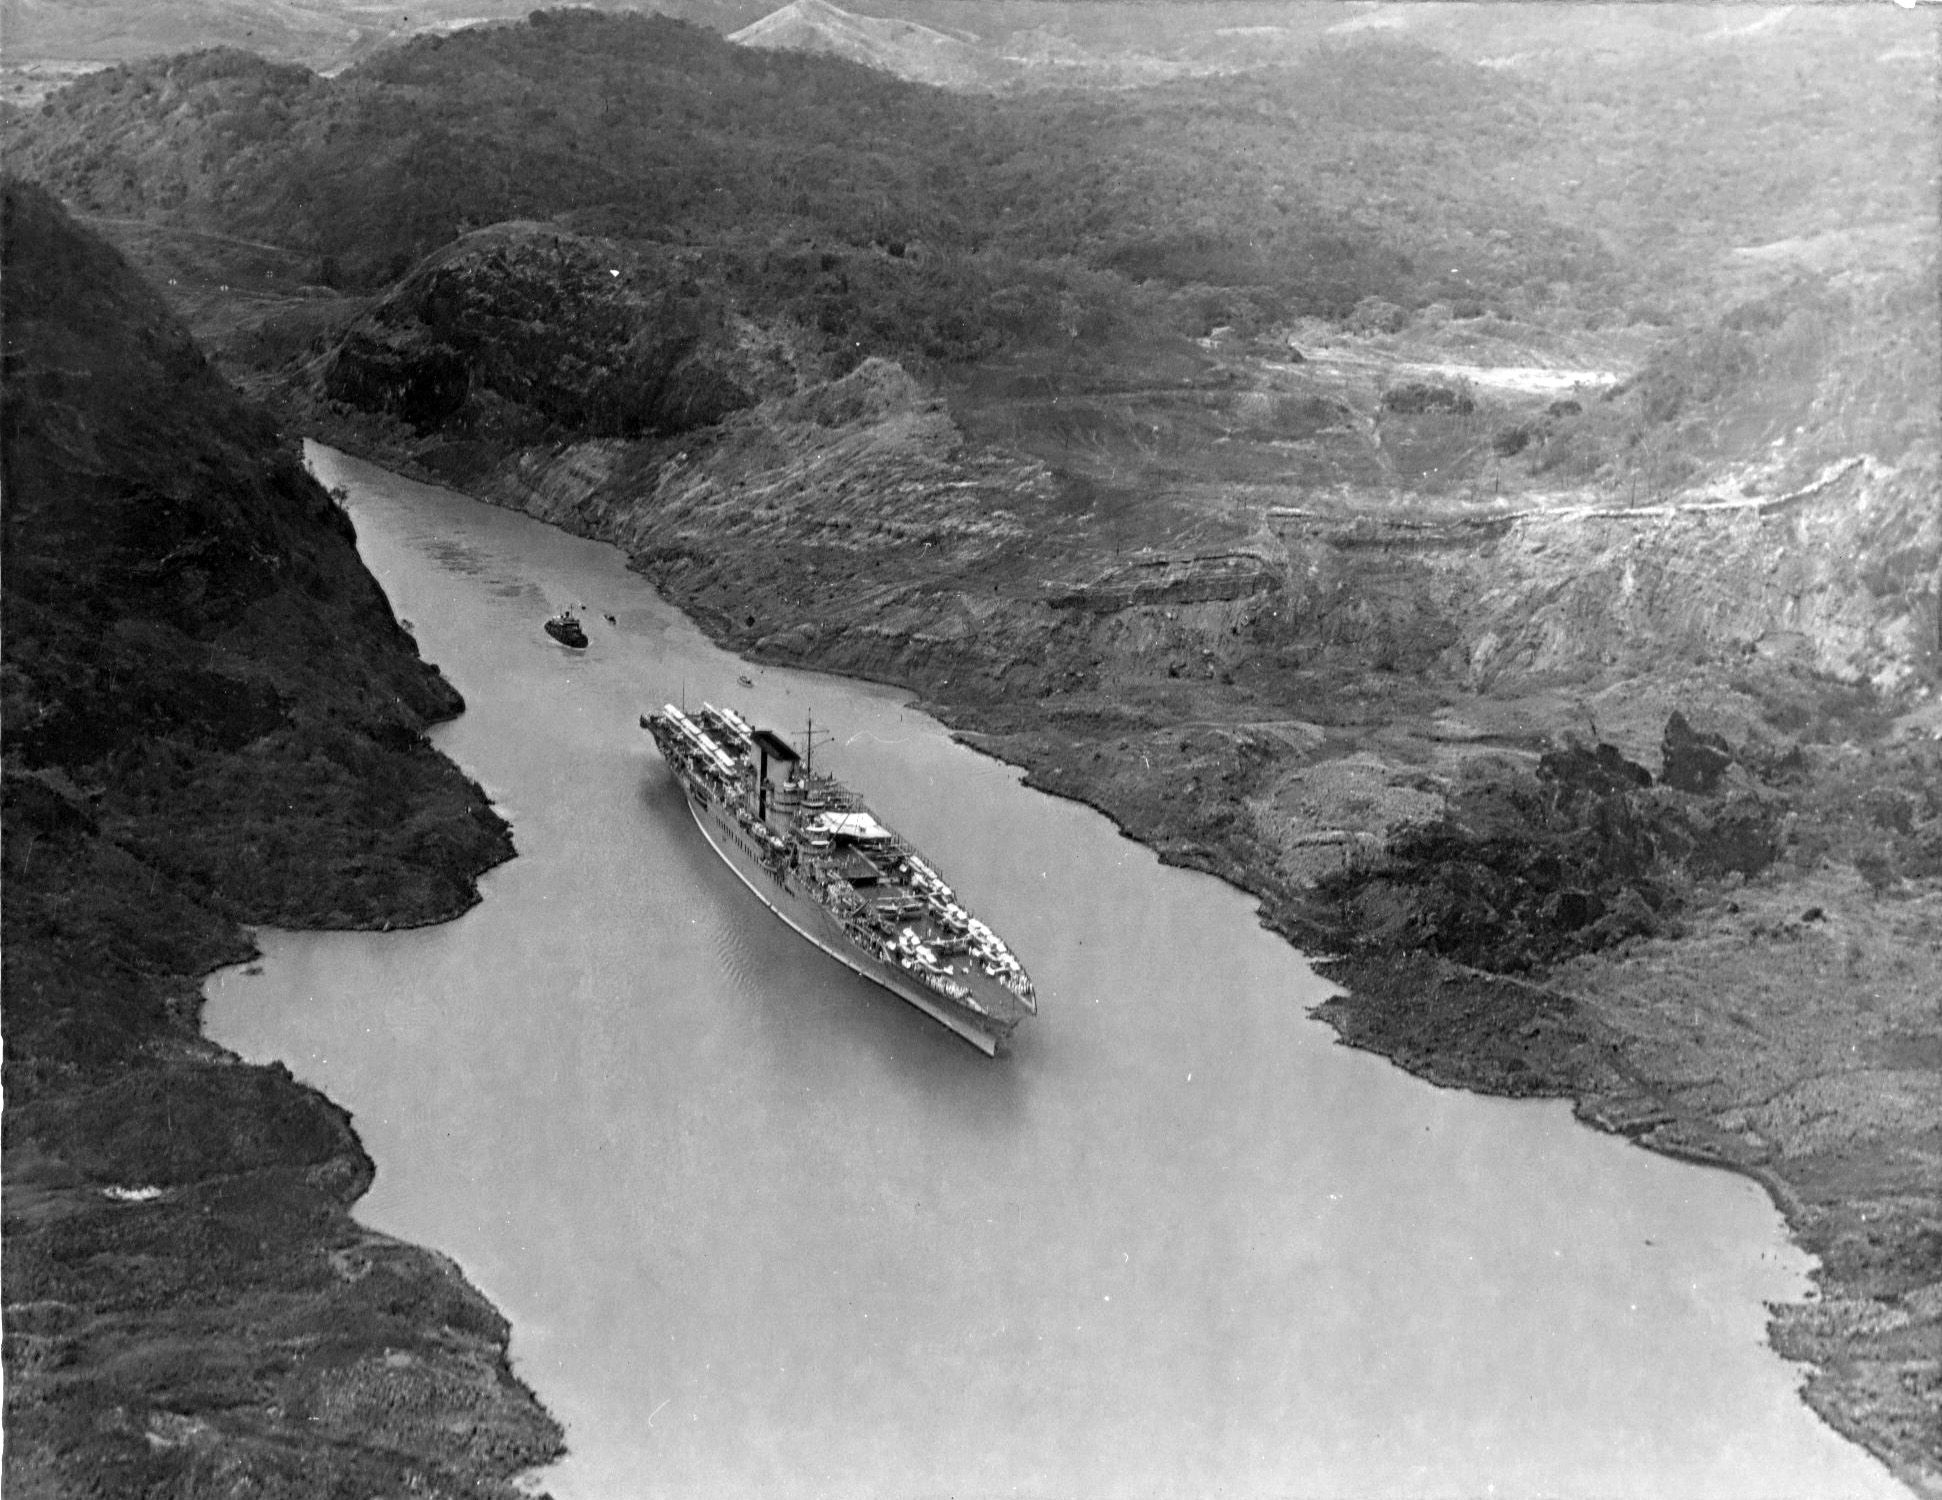 USS Saratoga transiting the Panama Canal, 1928-1932